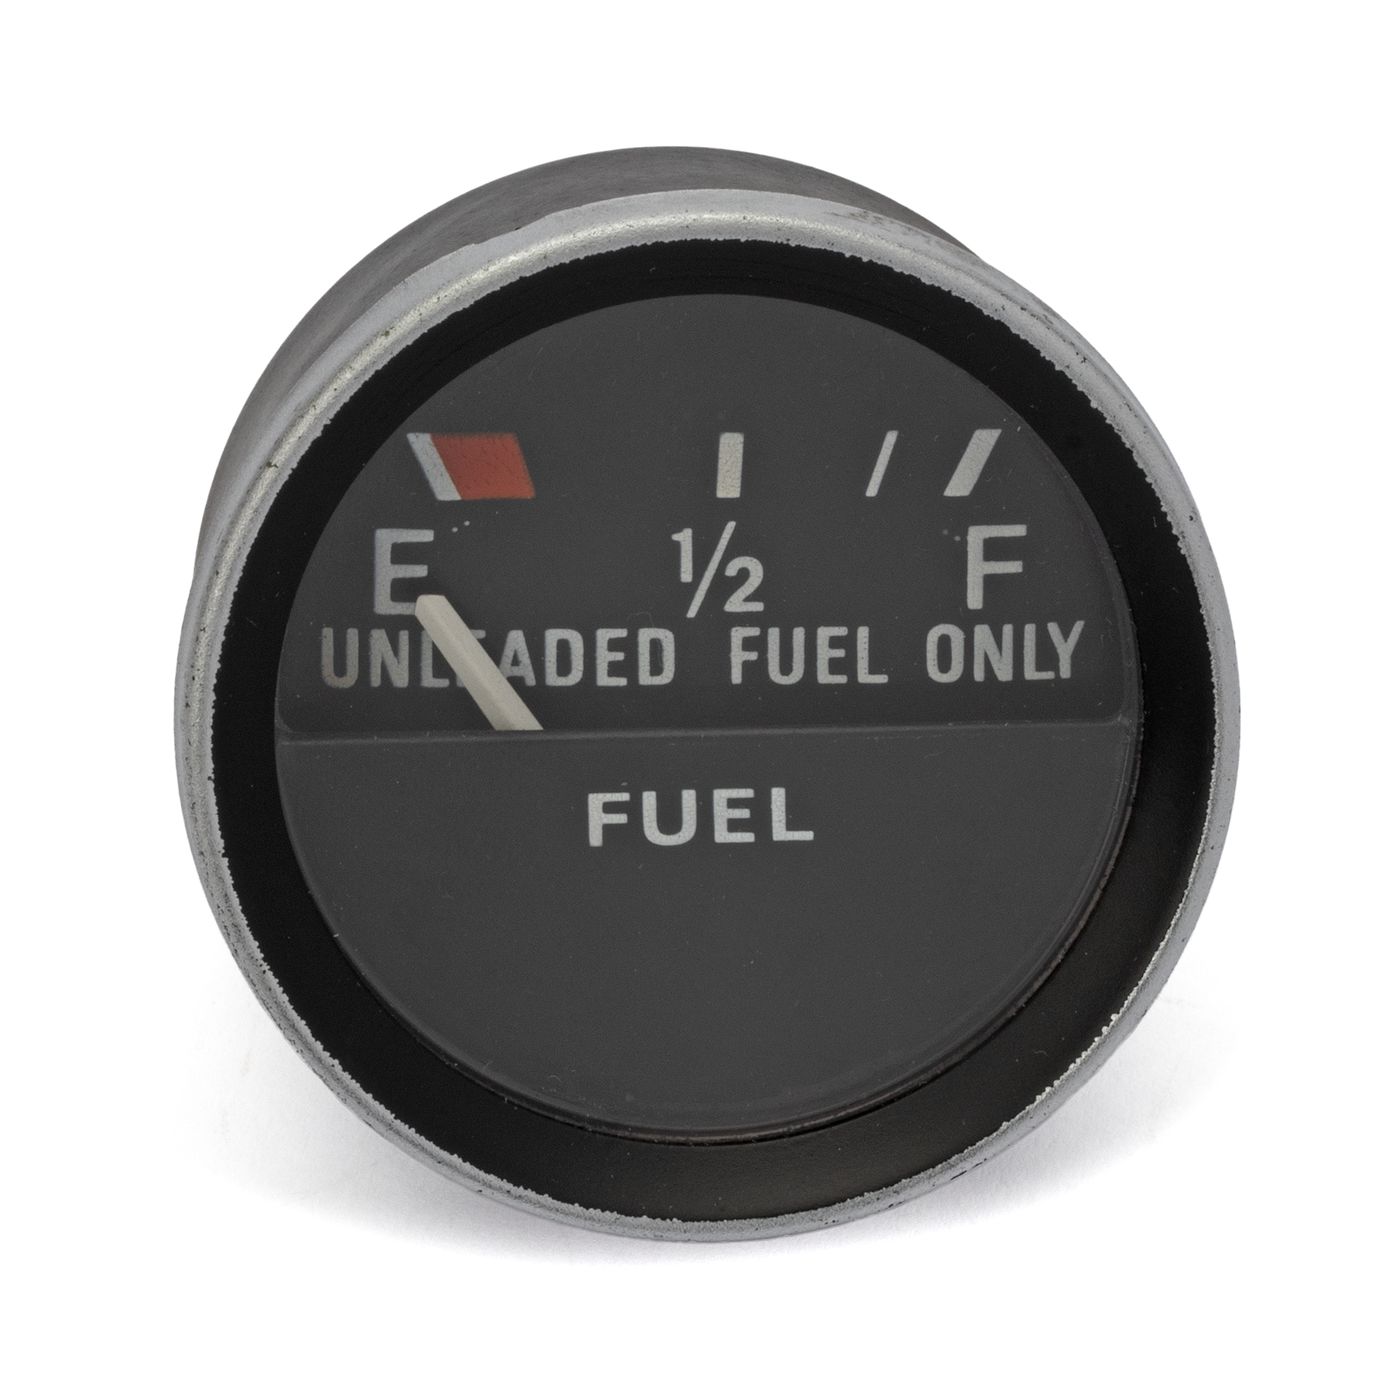 Tankanzeige
Fuel gauge
Jauge du carburant
Wskaźnik paliwa
Indic